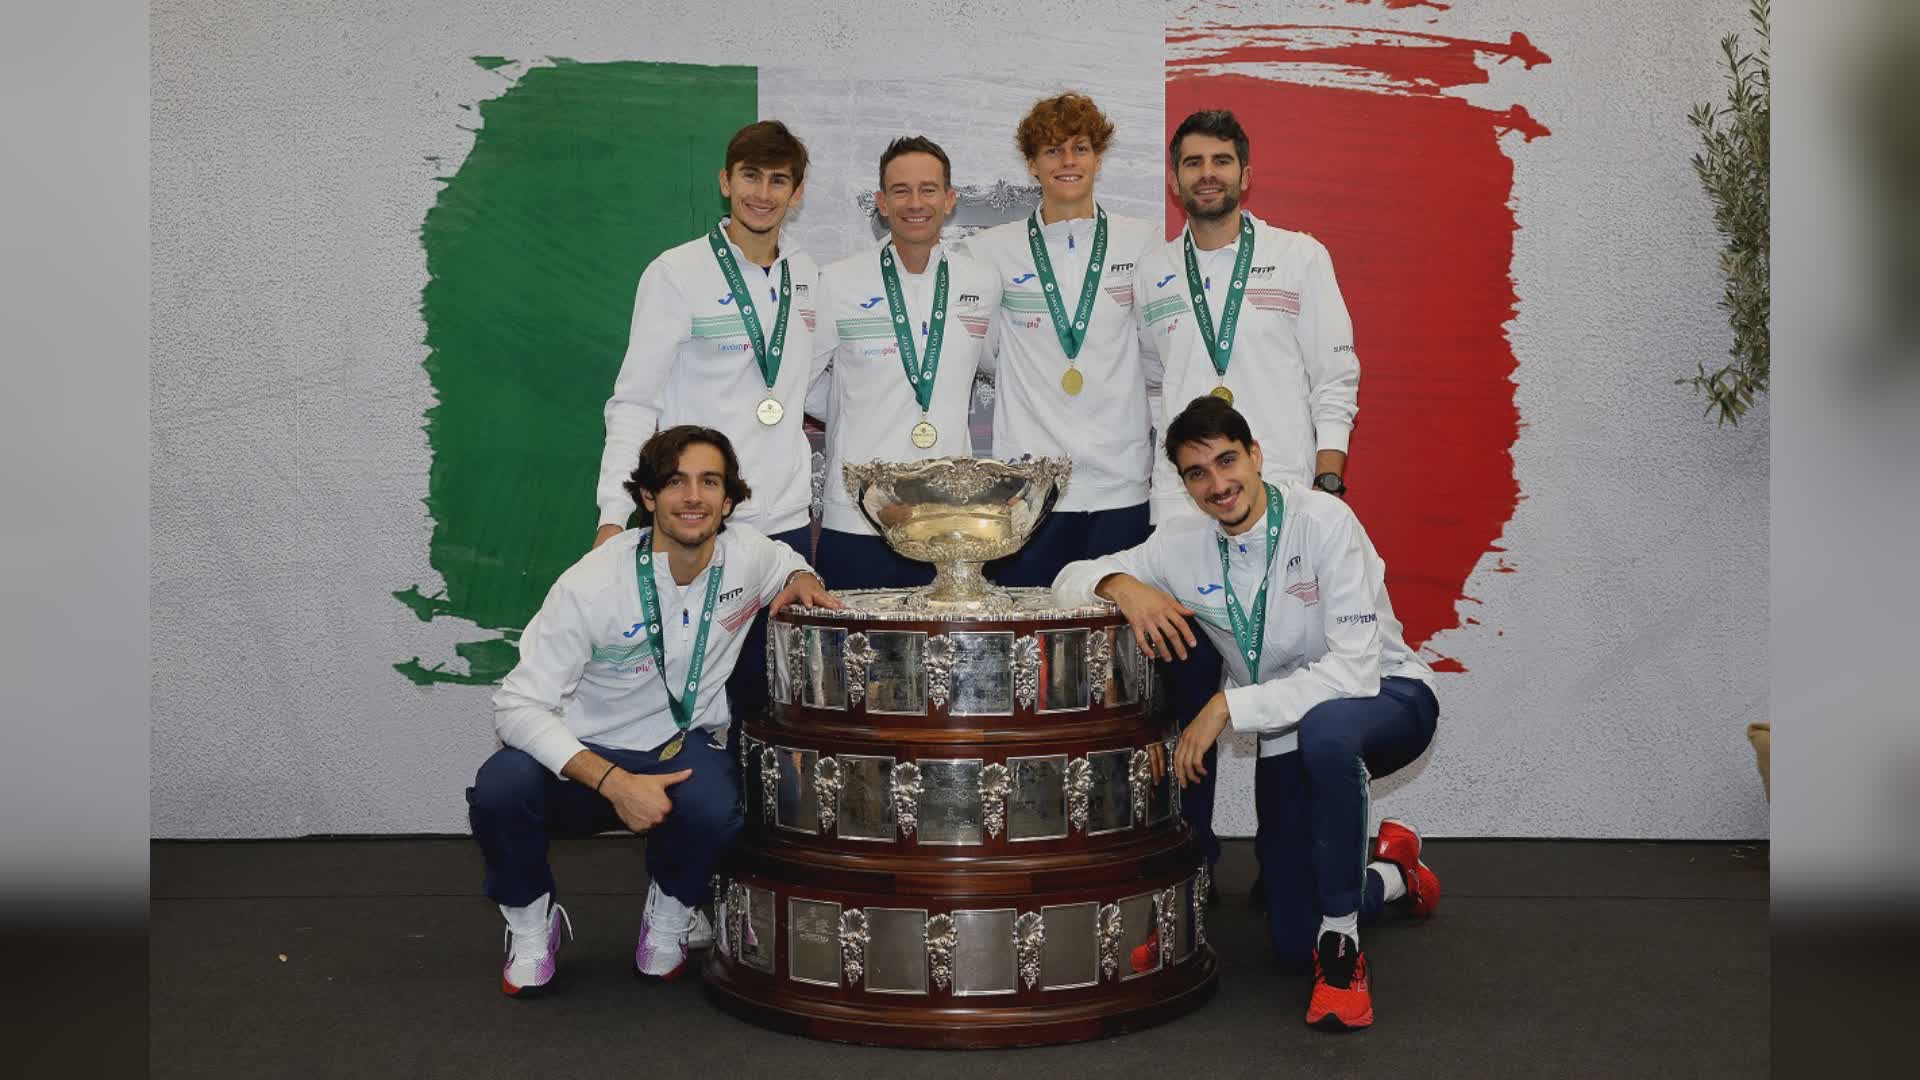 Genova, tennis: la Coppa Davis esposta a Palazzo Tursi dal 26 al 30 gennaio